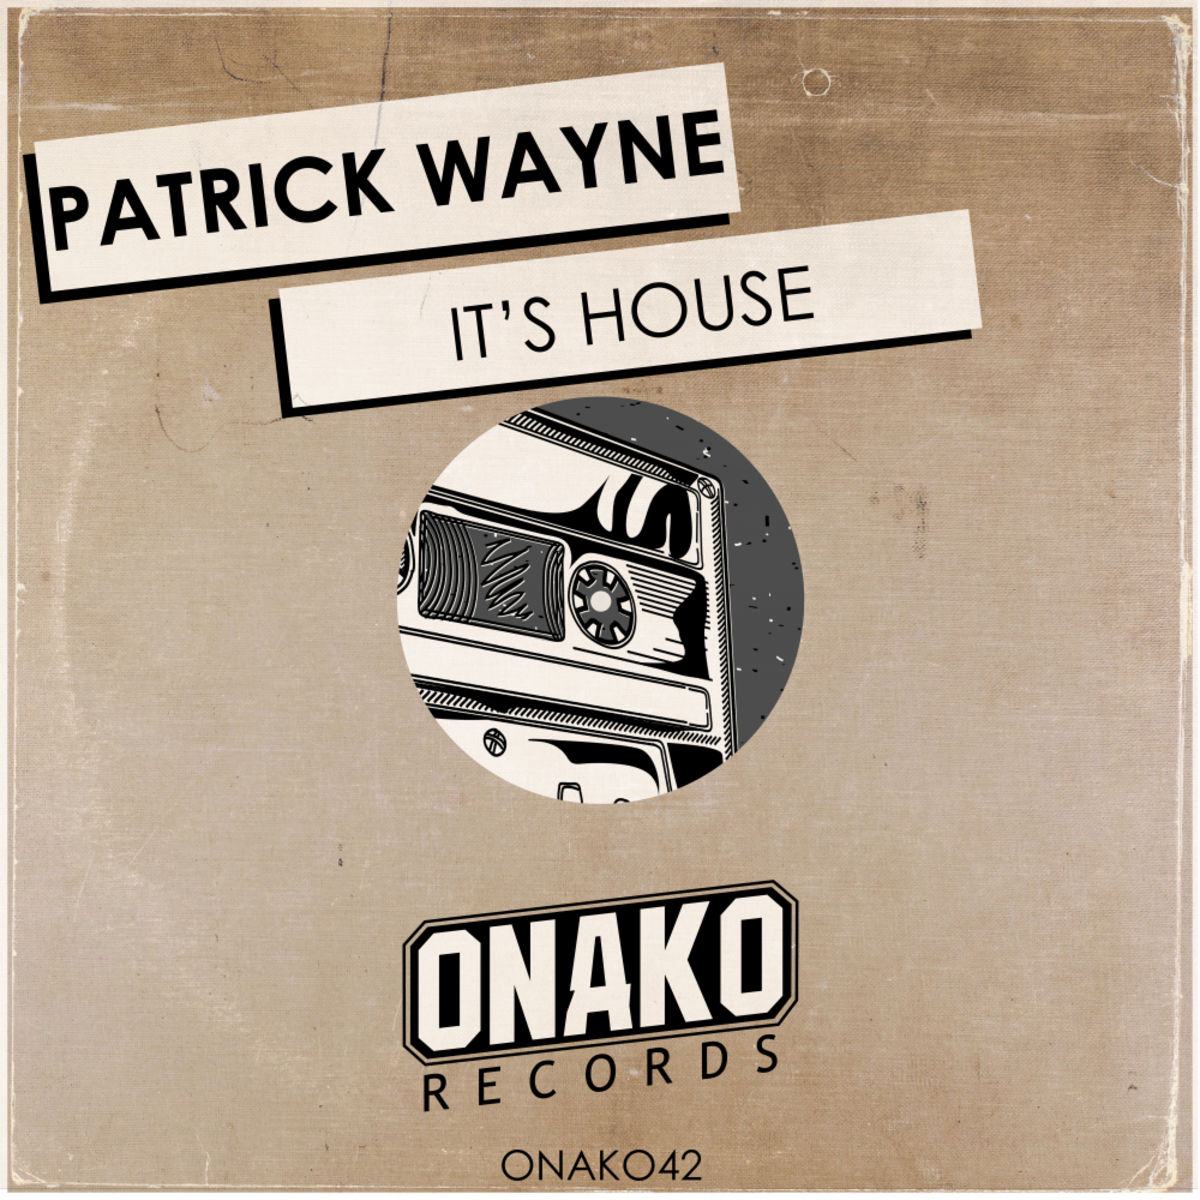 Patrick Wayne - It's House / Onako Records